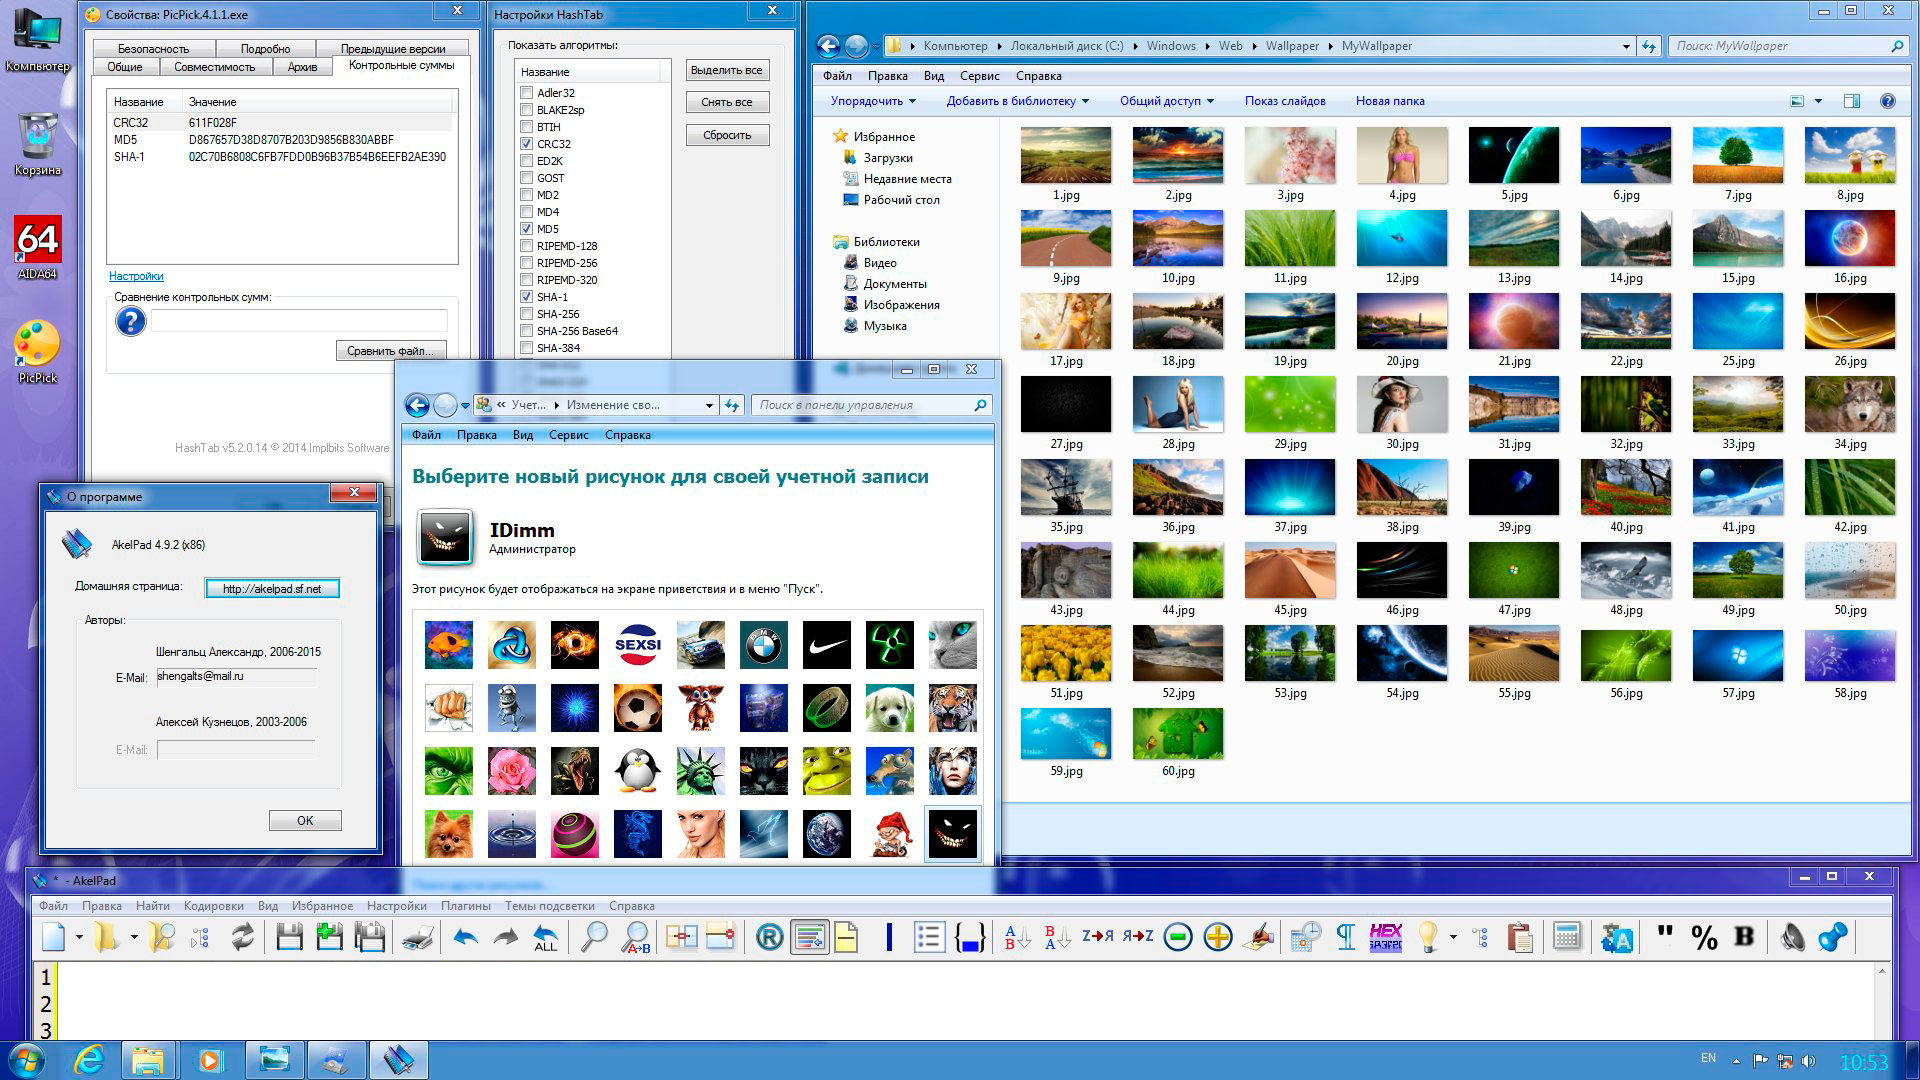 Windows 7 Professional SP1 х86/x64 IDimm Edition v.23.16 - «Windows»